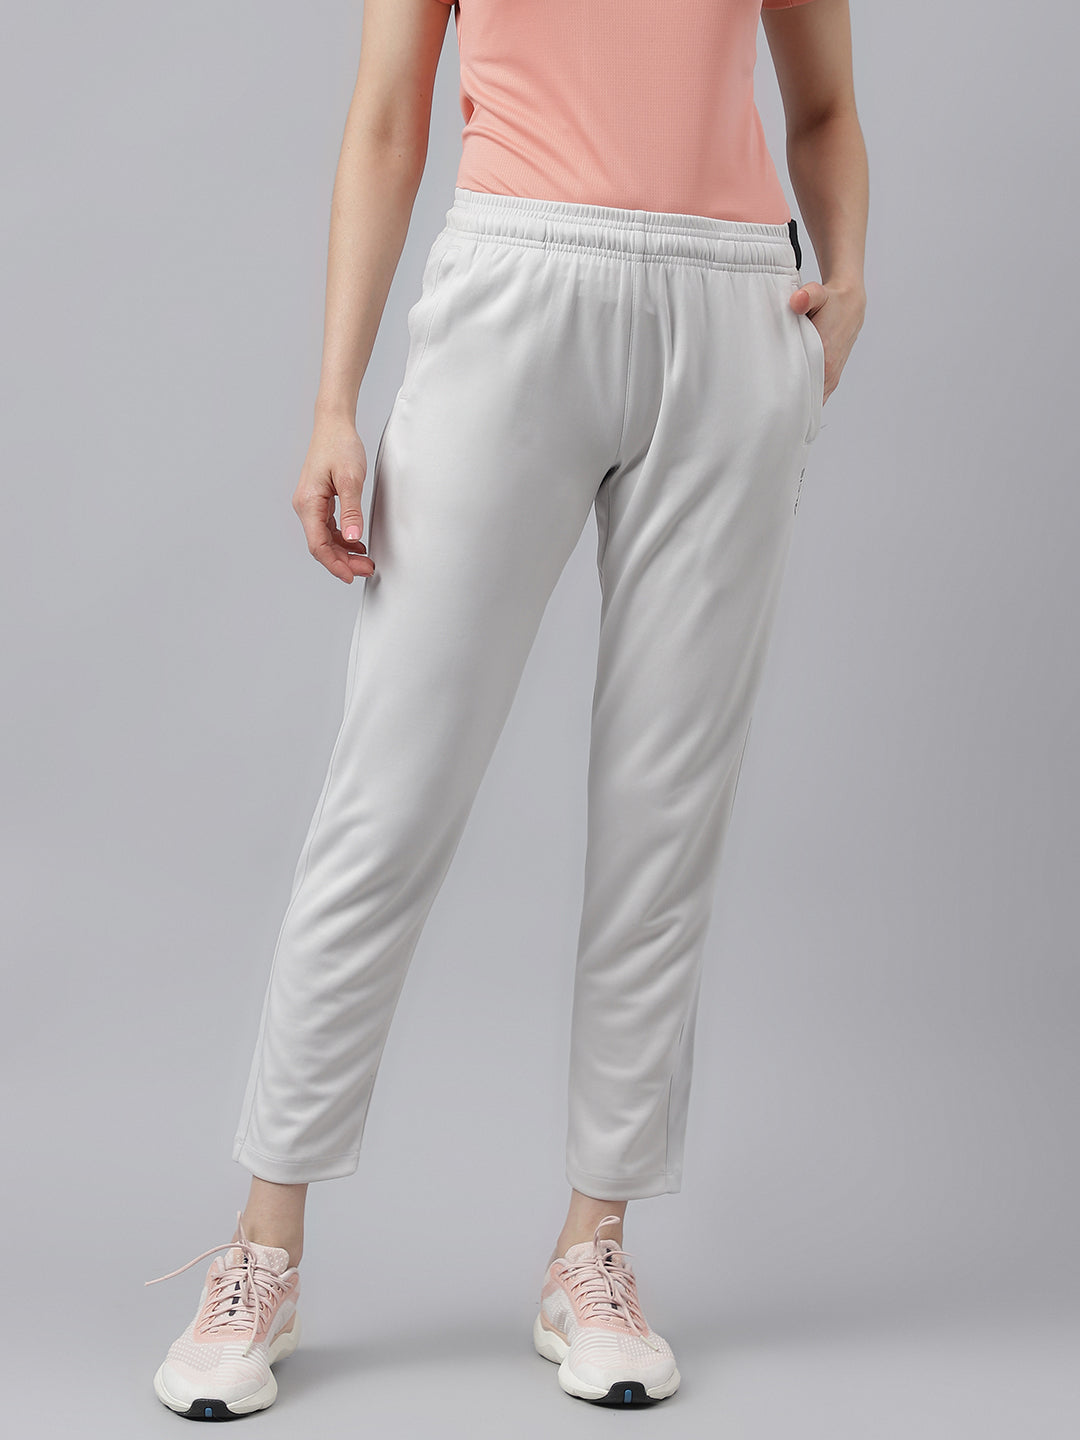 Alcis Women's Light Grey Anti-Static Drytech+ Slim-Fit Running Track Pants